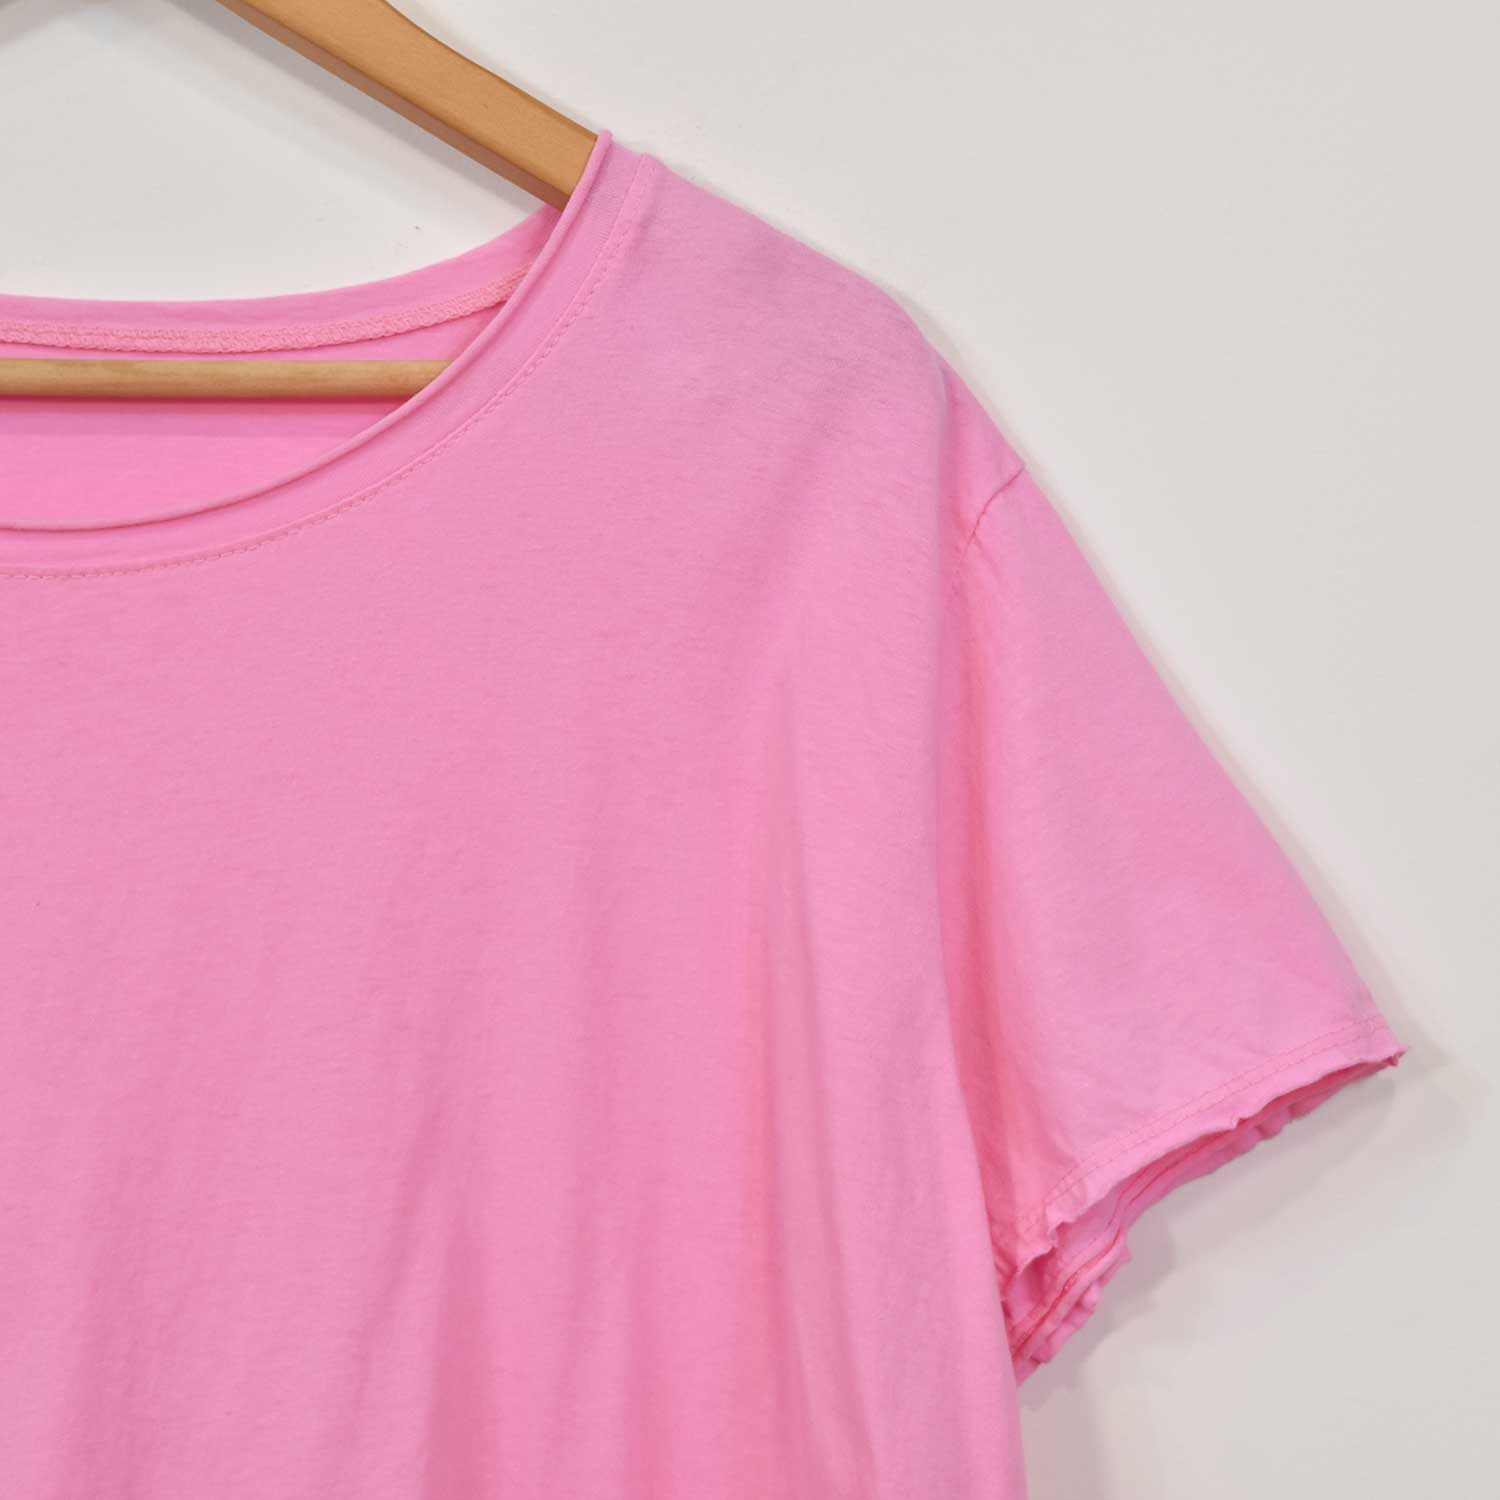 Camiseta asimétrica manga corta rosa